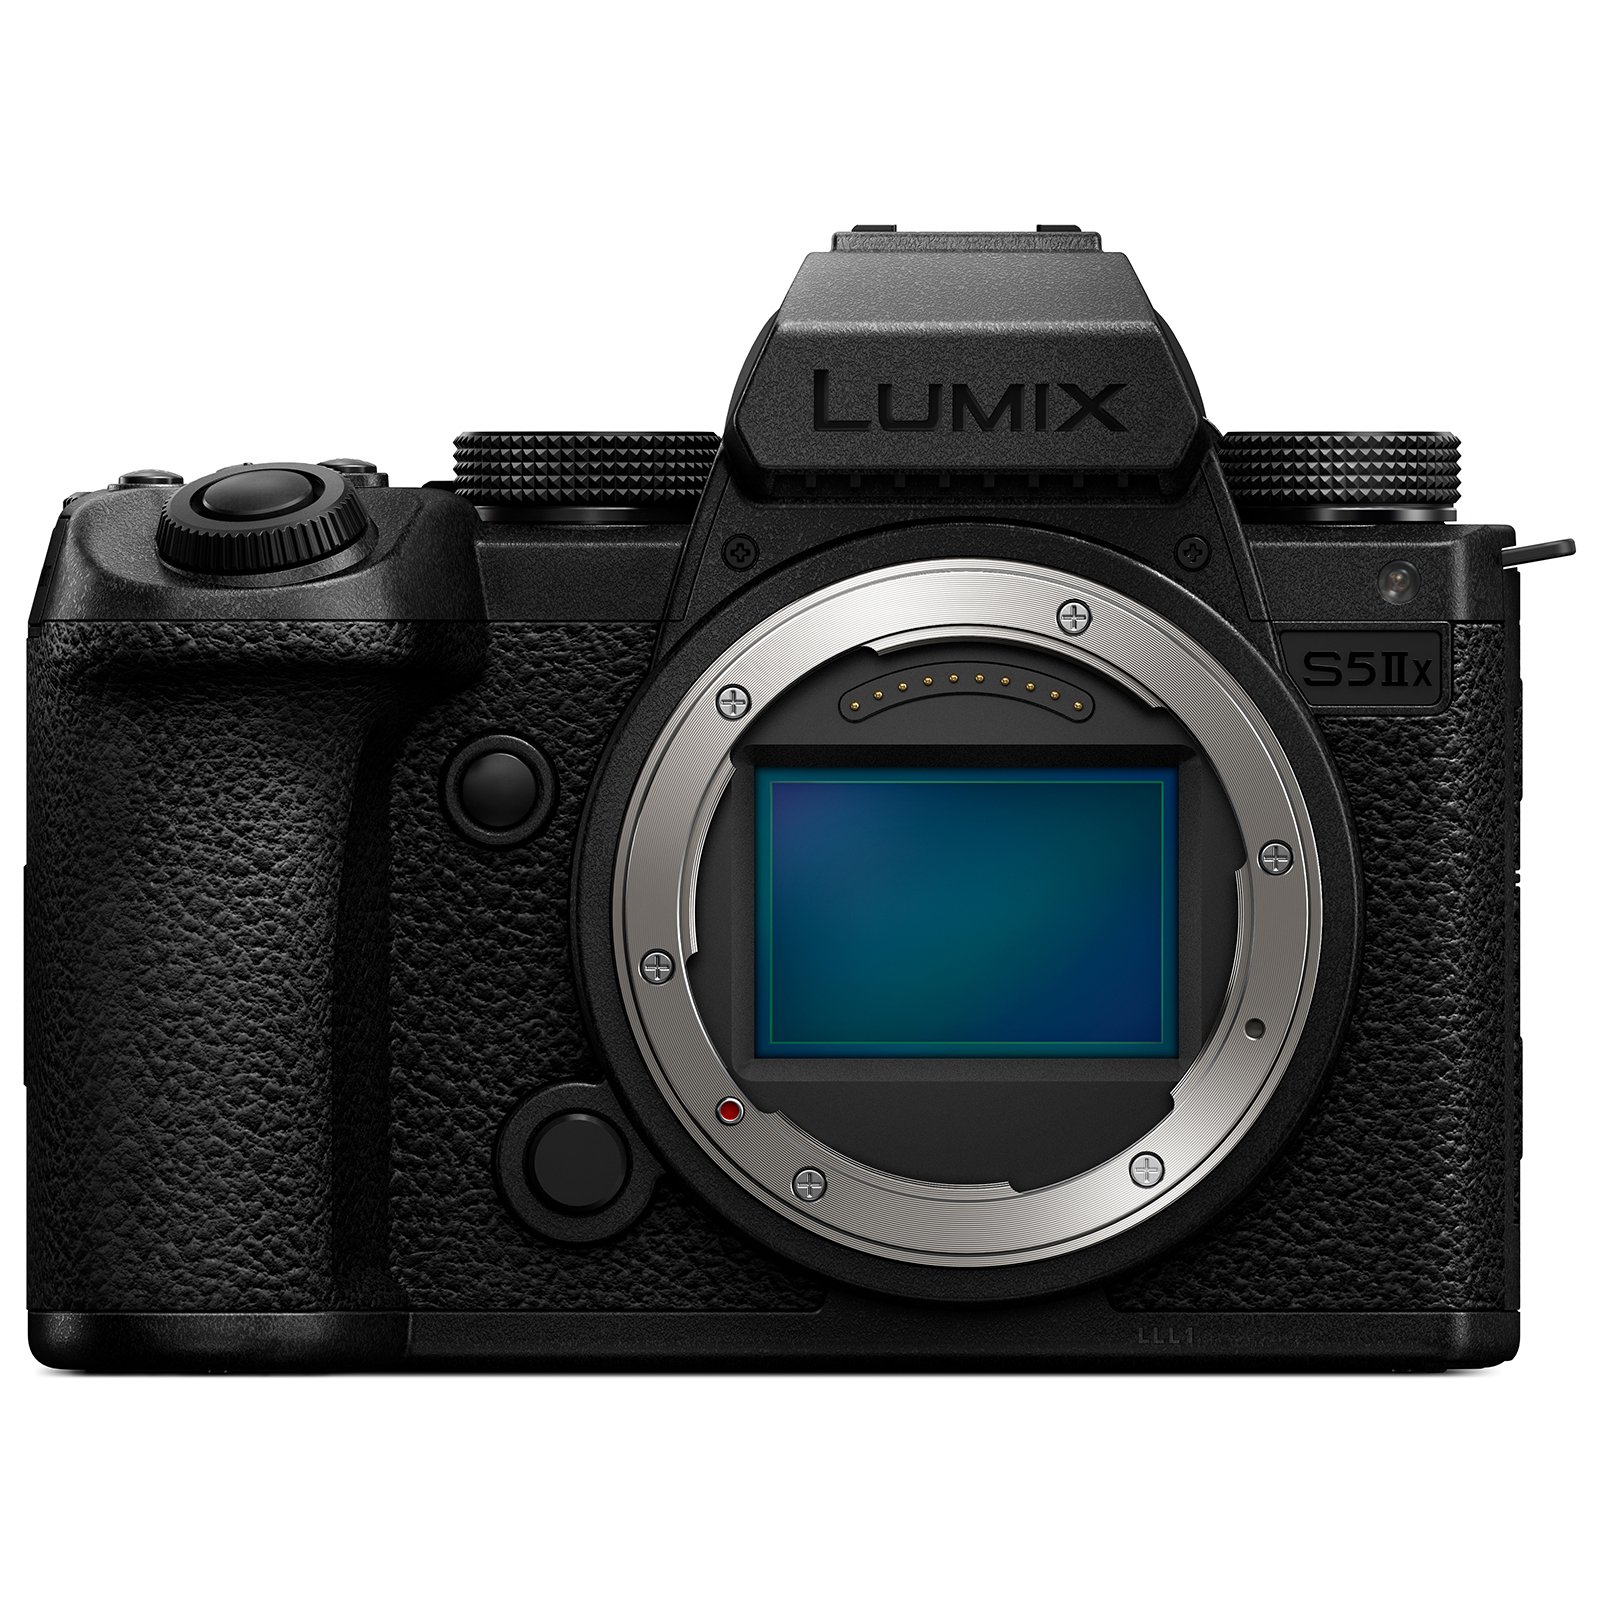 Image of Panasonic Lumix S5 IIX Digital Camera Body